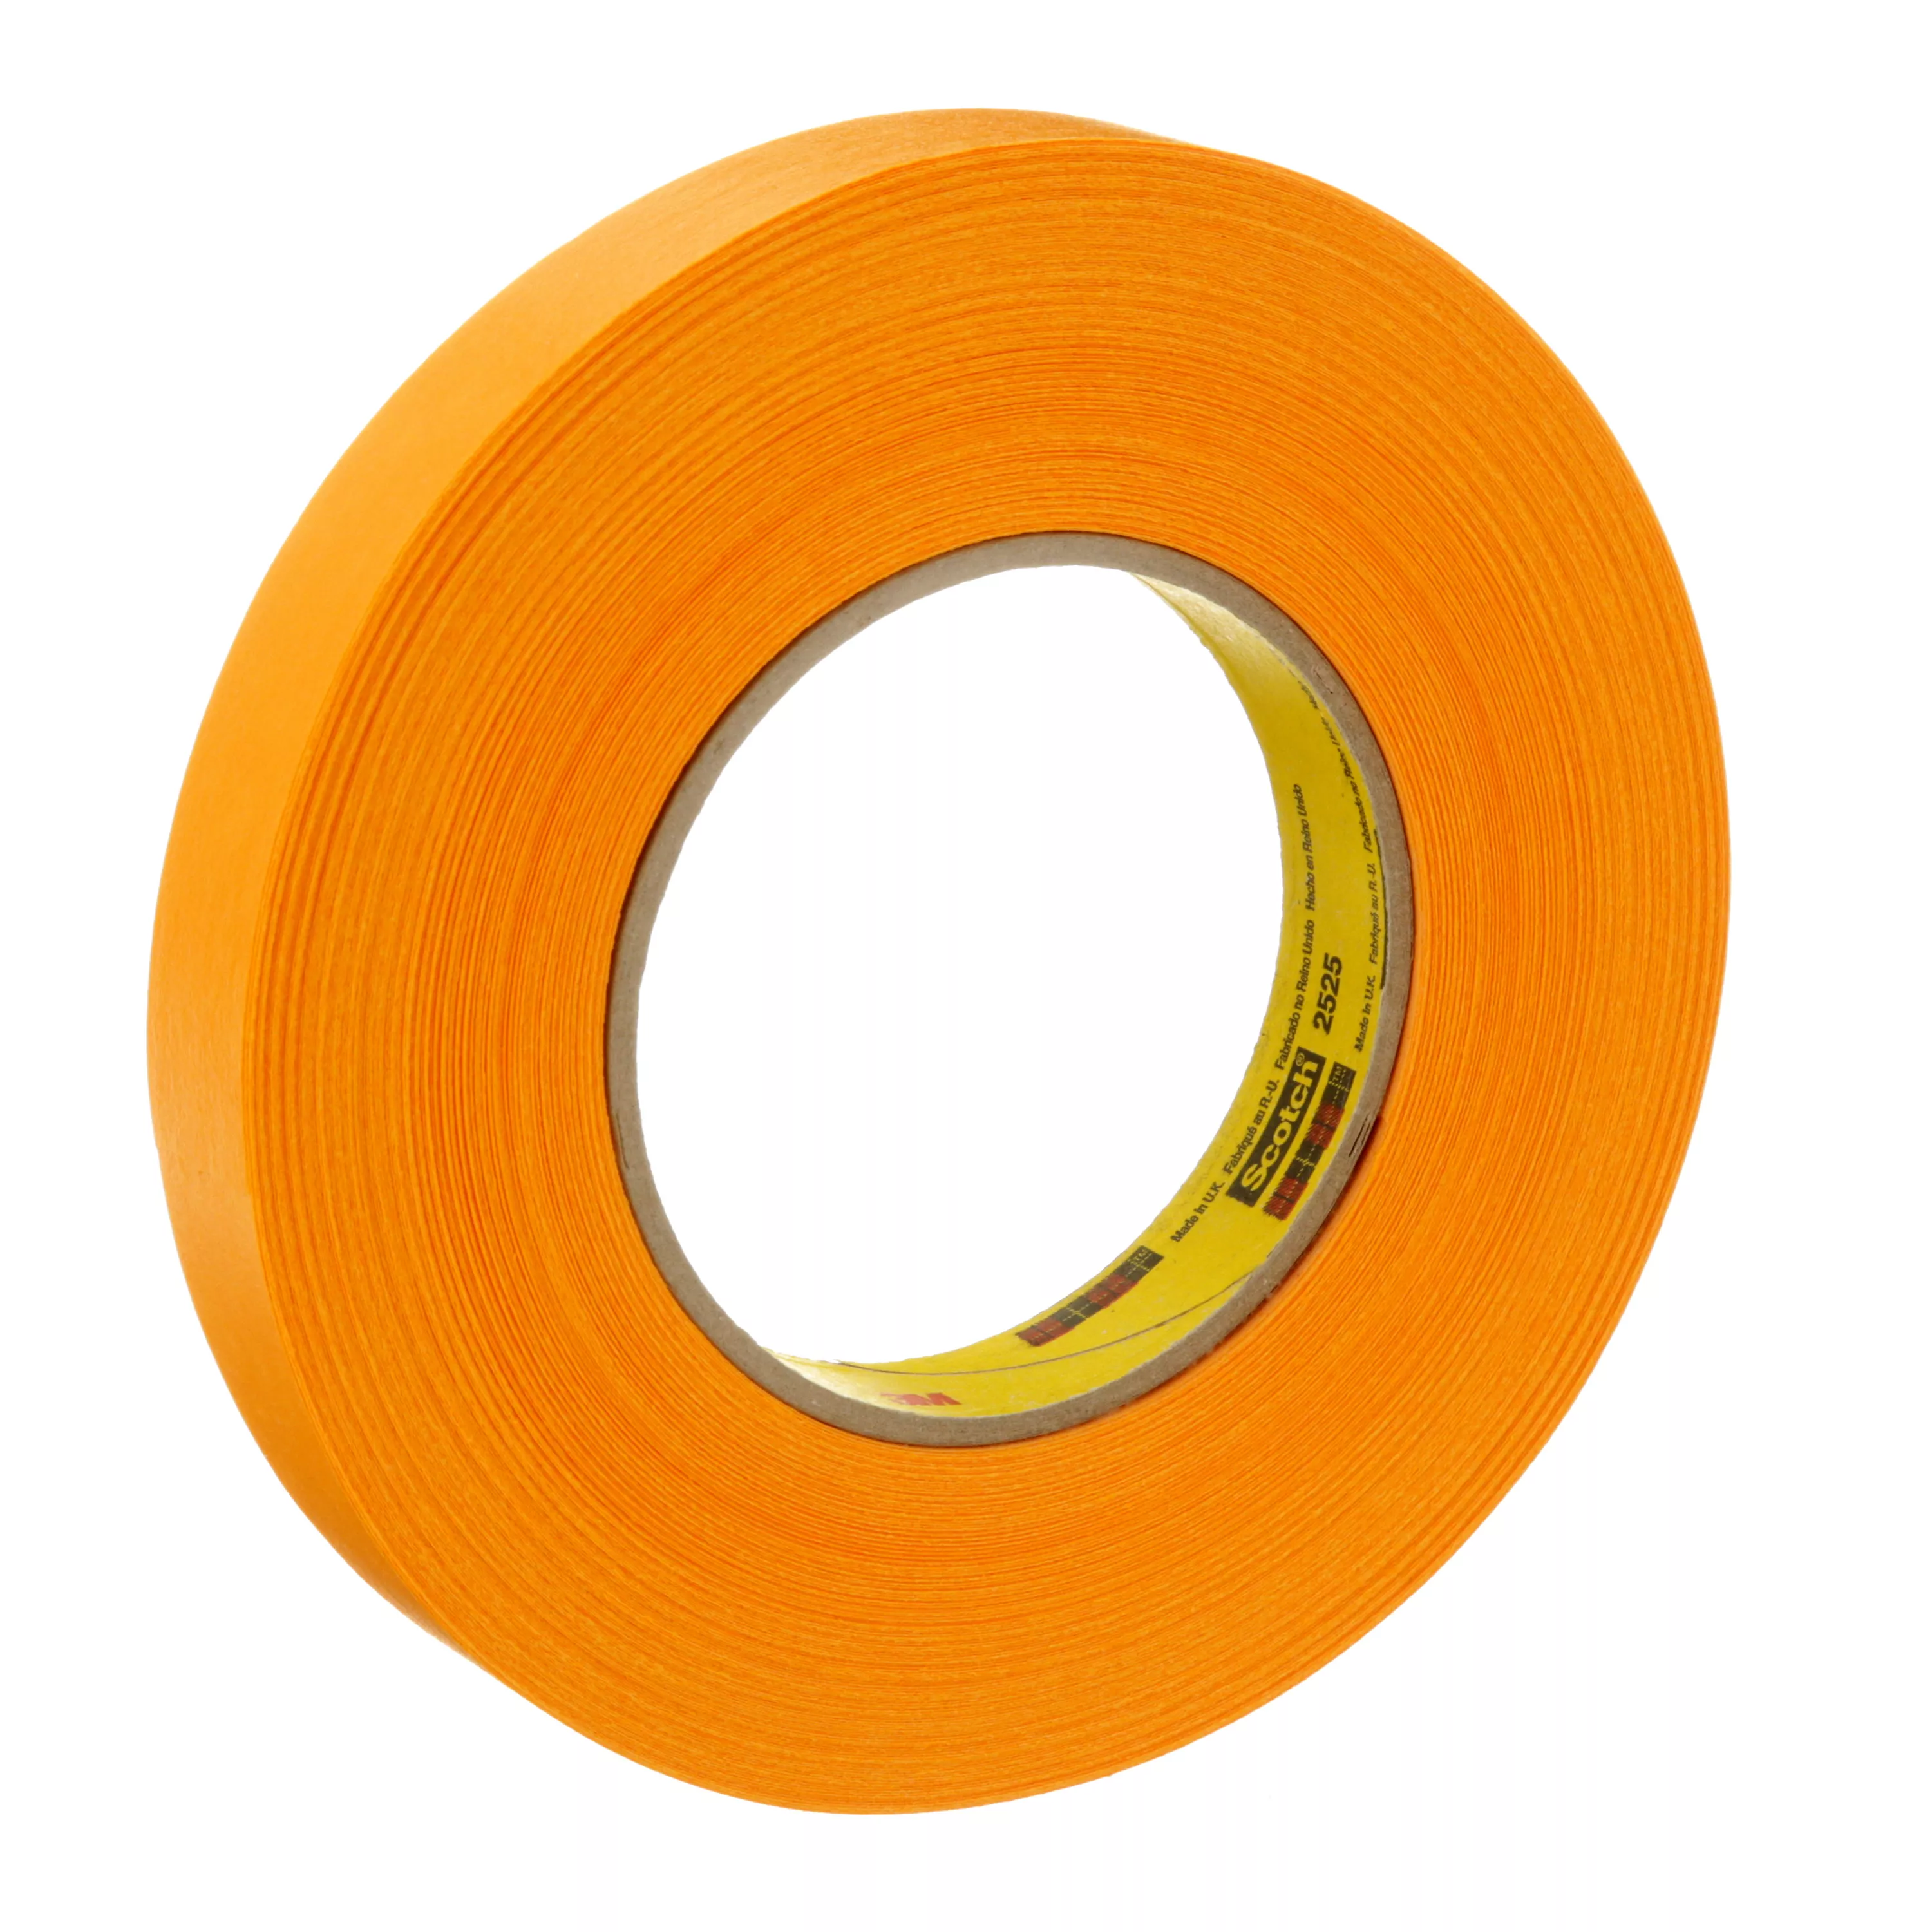 3M™ Performance Flatback Tape 2525, Orange, 18 mm x 55 m, 9.5 mil, 48
Rolls/Case